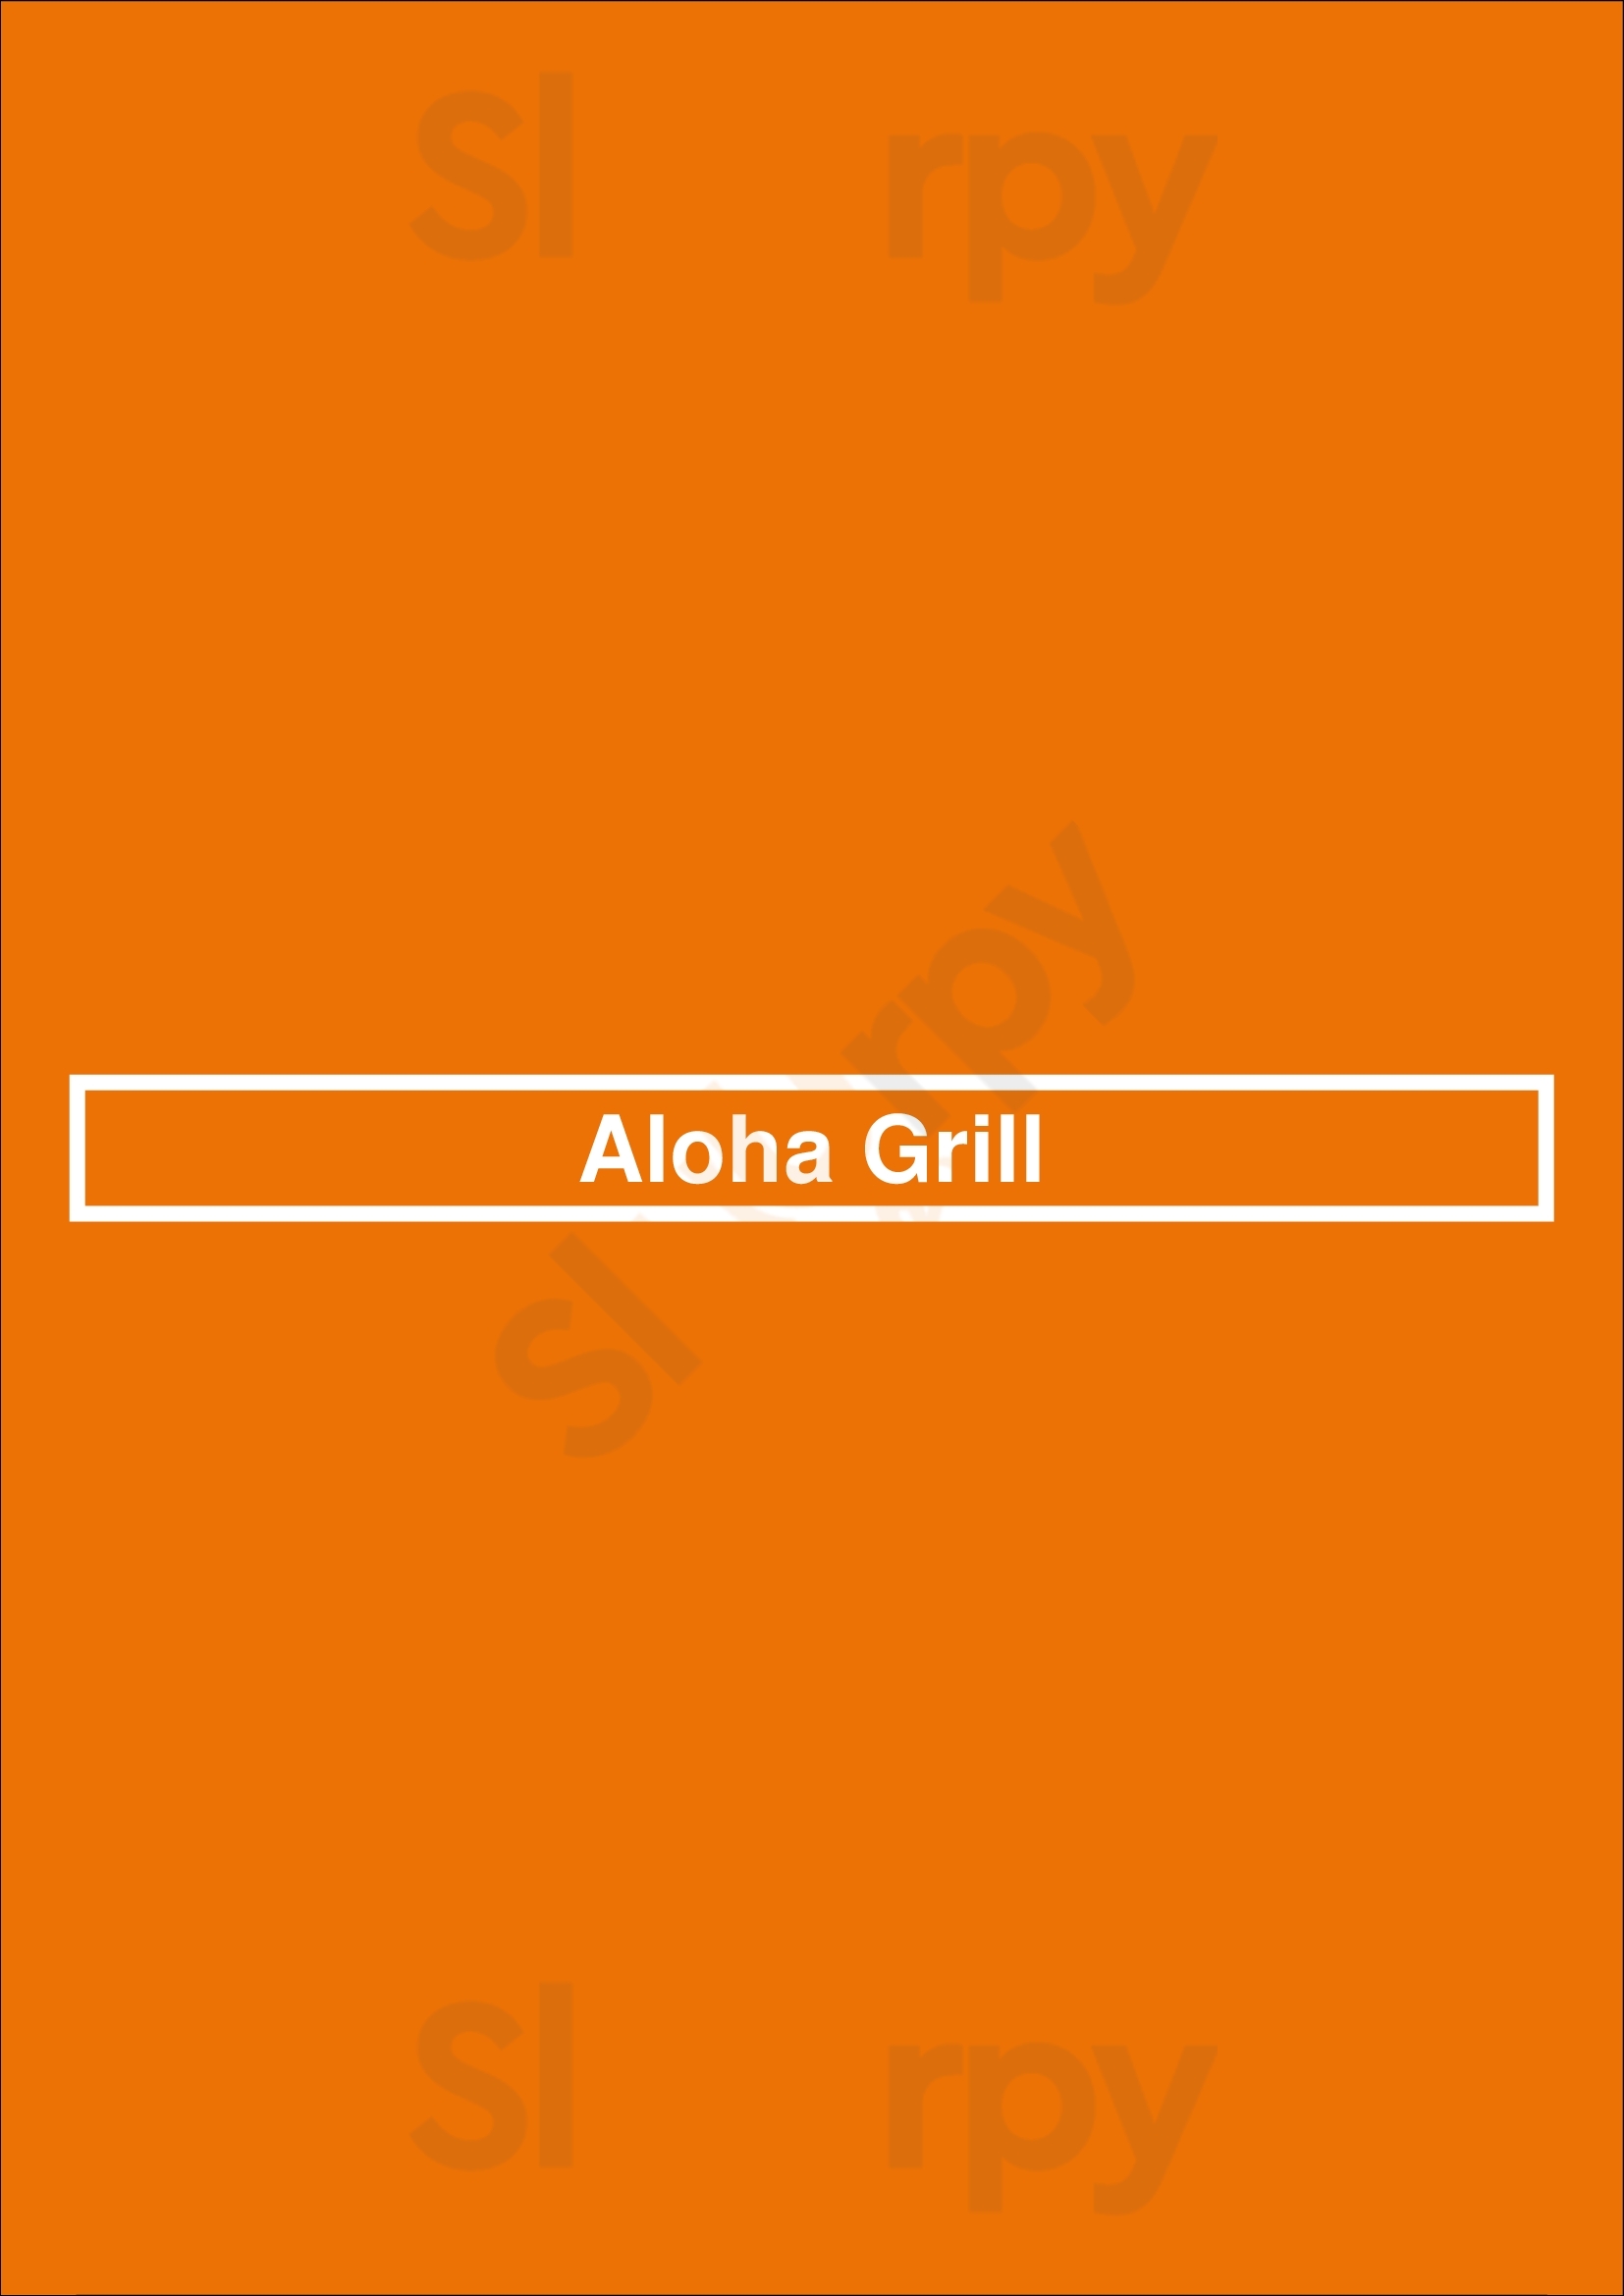 Aloha Grill Renton Menu - 1